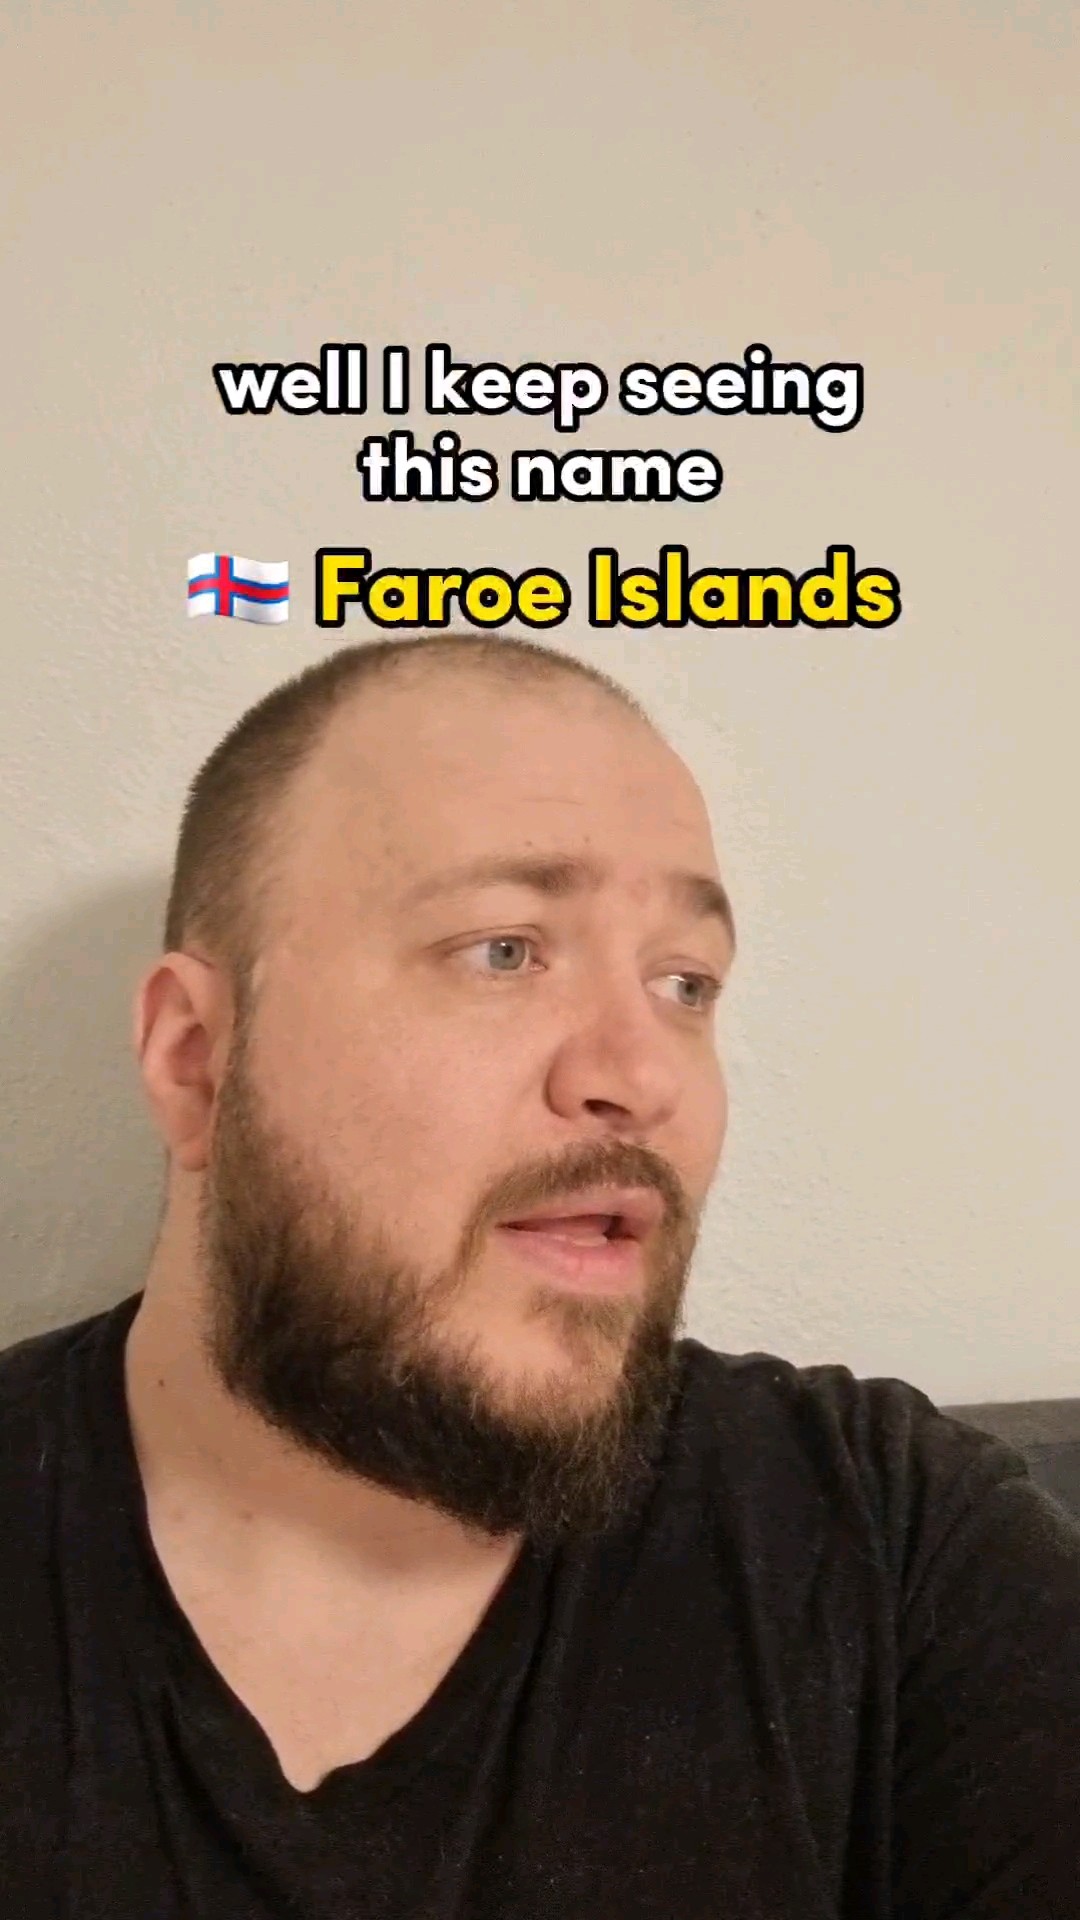 FAROE ISLANDS? WHAT'S THAT. #NORDİCS #FUNNY #FAROEİSLANDS #LANGUAGE